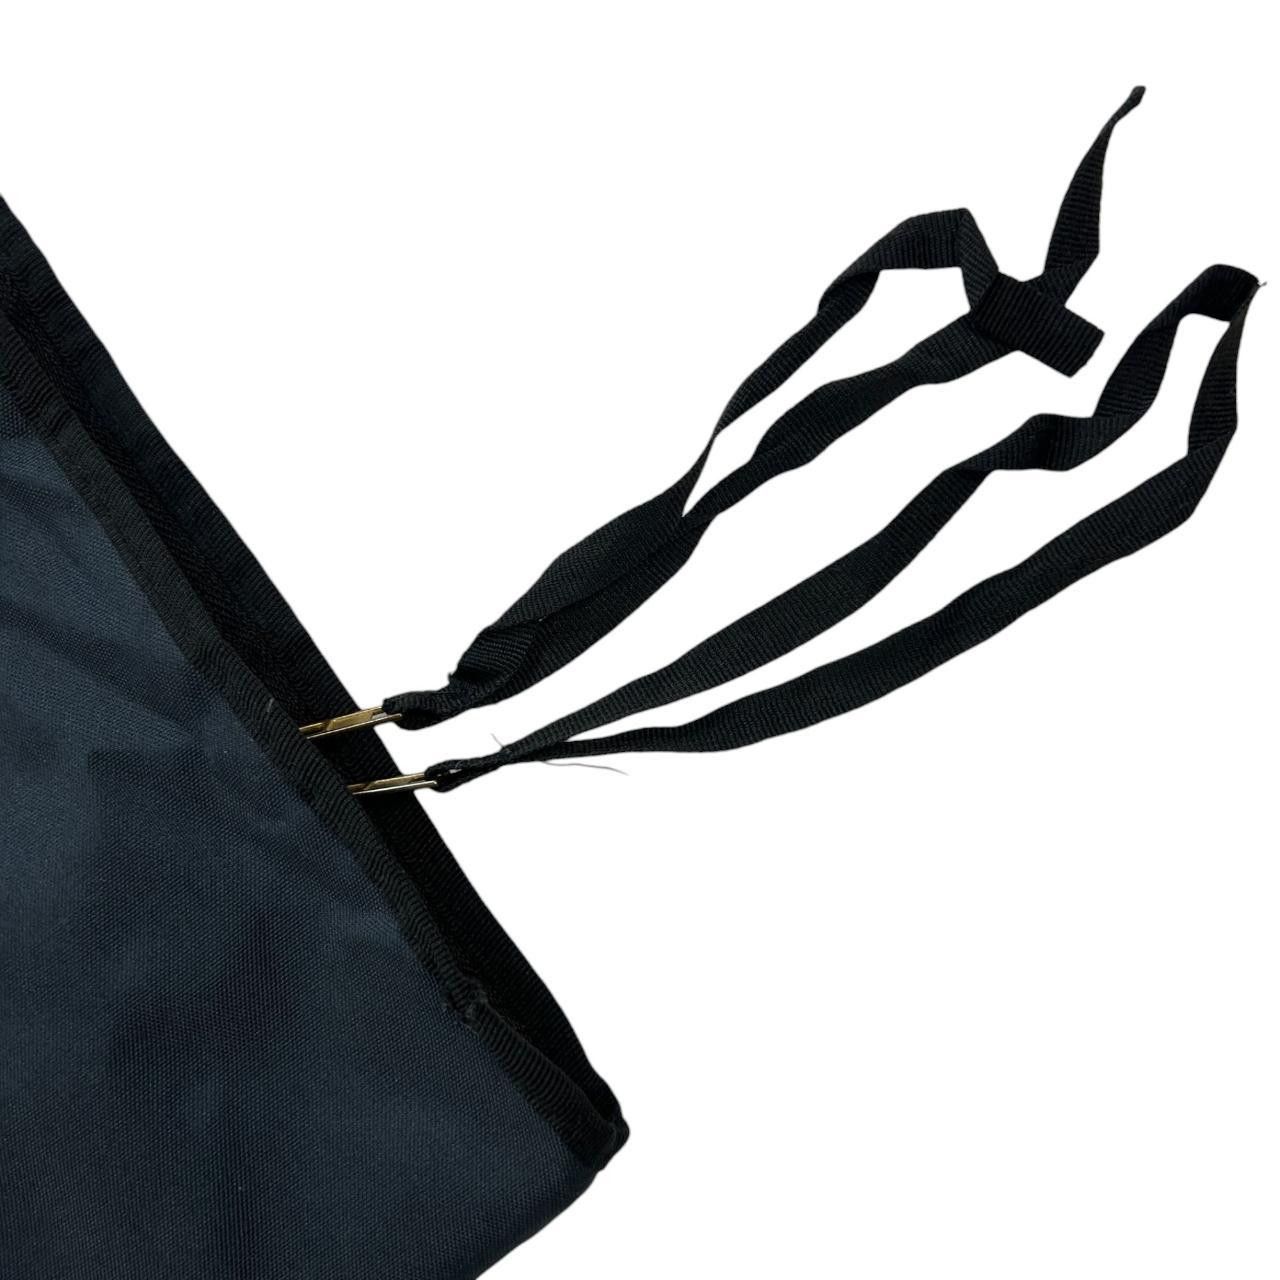 Sacai Vintage Sacai The North Face Collaboration Suit Dress Bag Size ONE SIZE - 3 Thumbnail